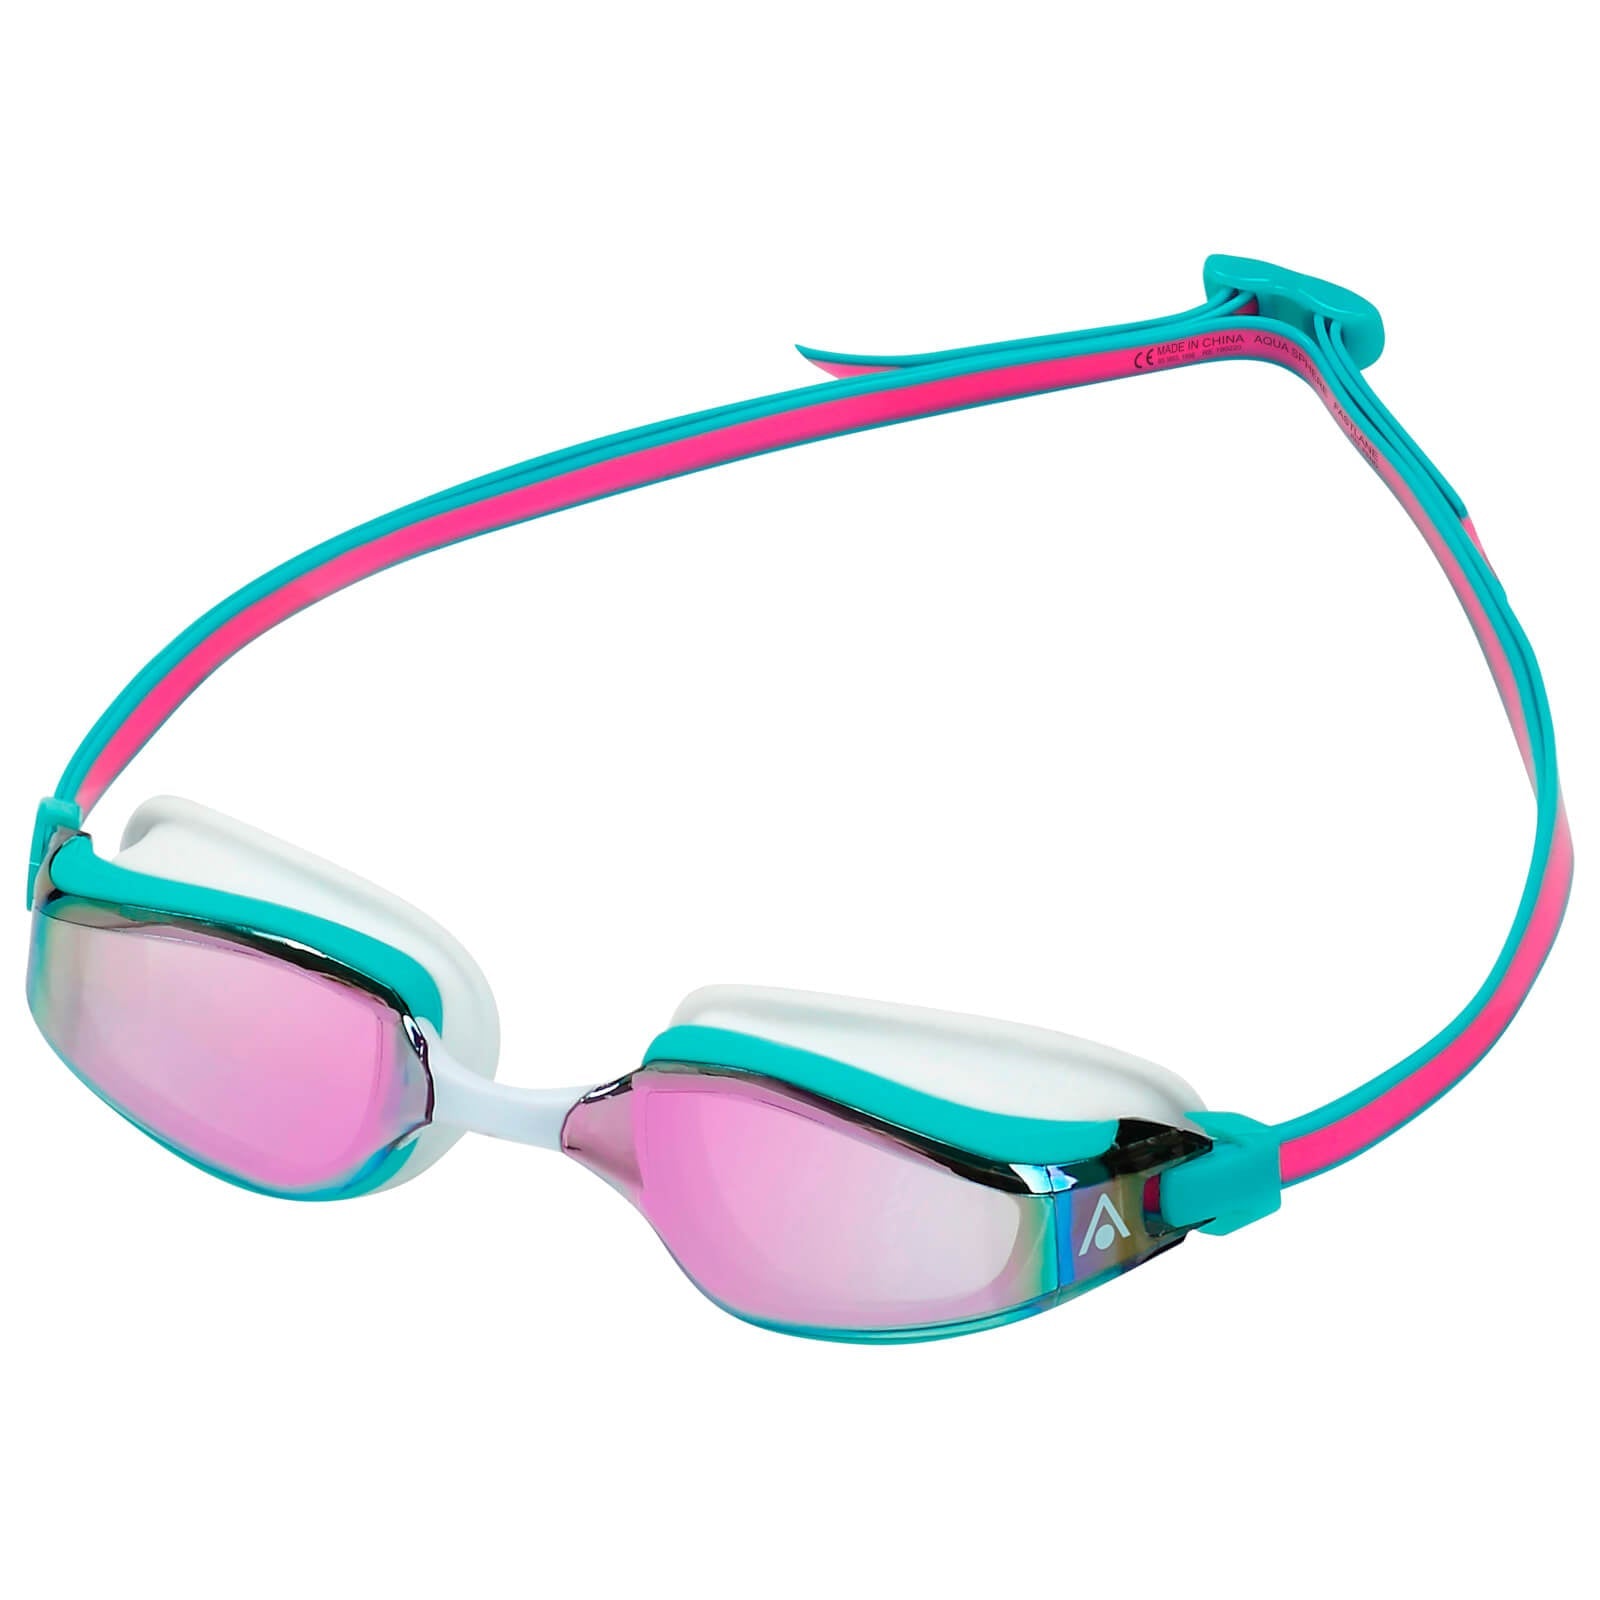 Men's Swimming Goggles Aqua Sphere Fastlane Adult Fitness Pool Pink/Turquoise - Pink Titanium Mirrored